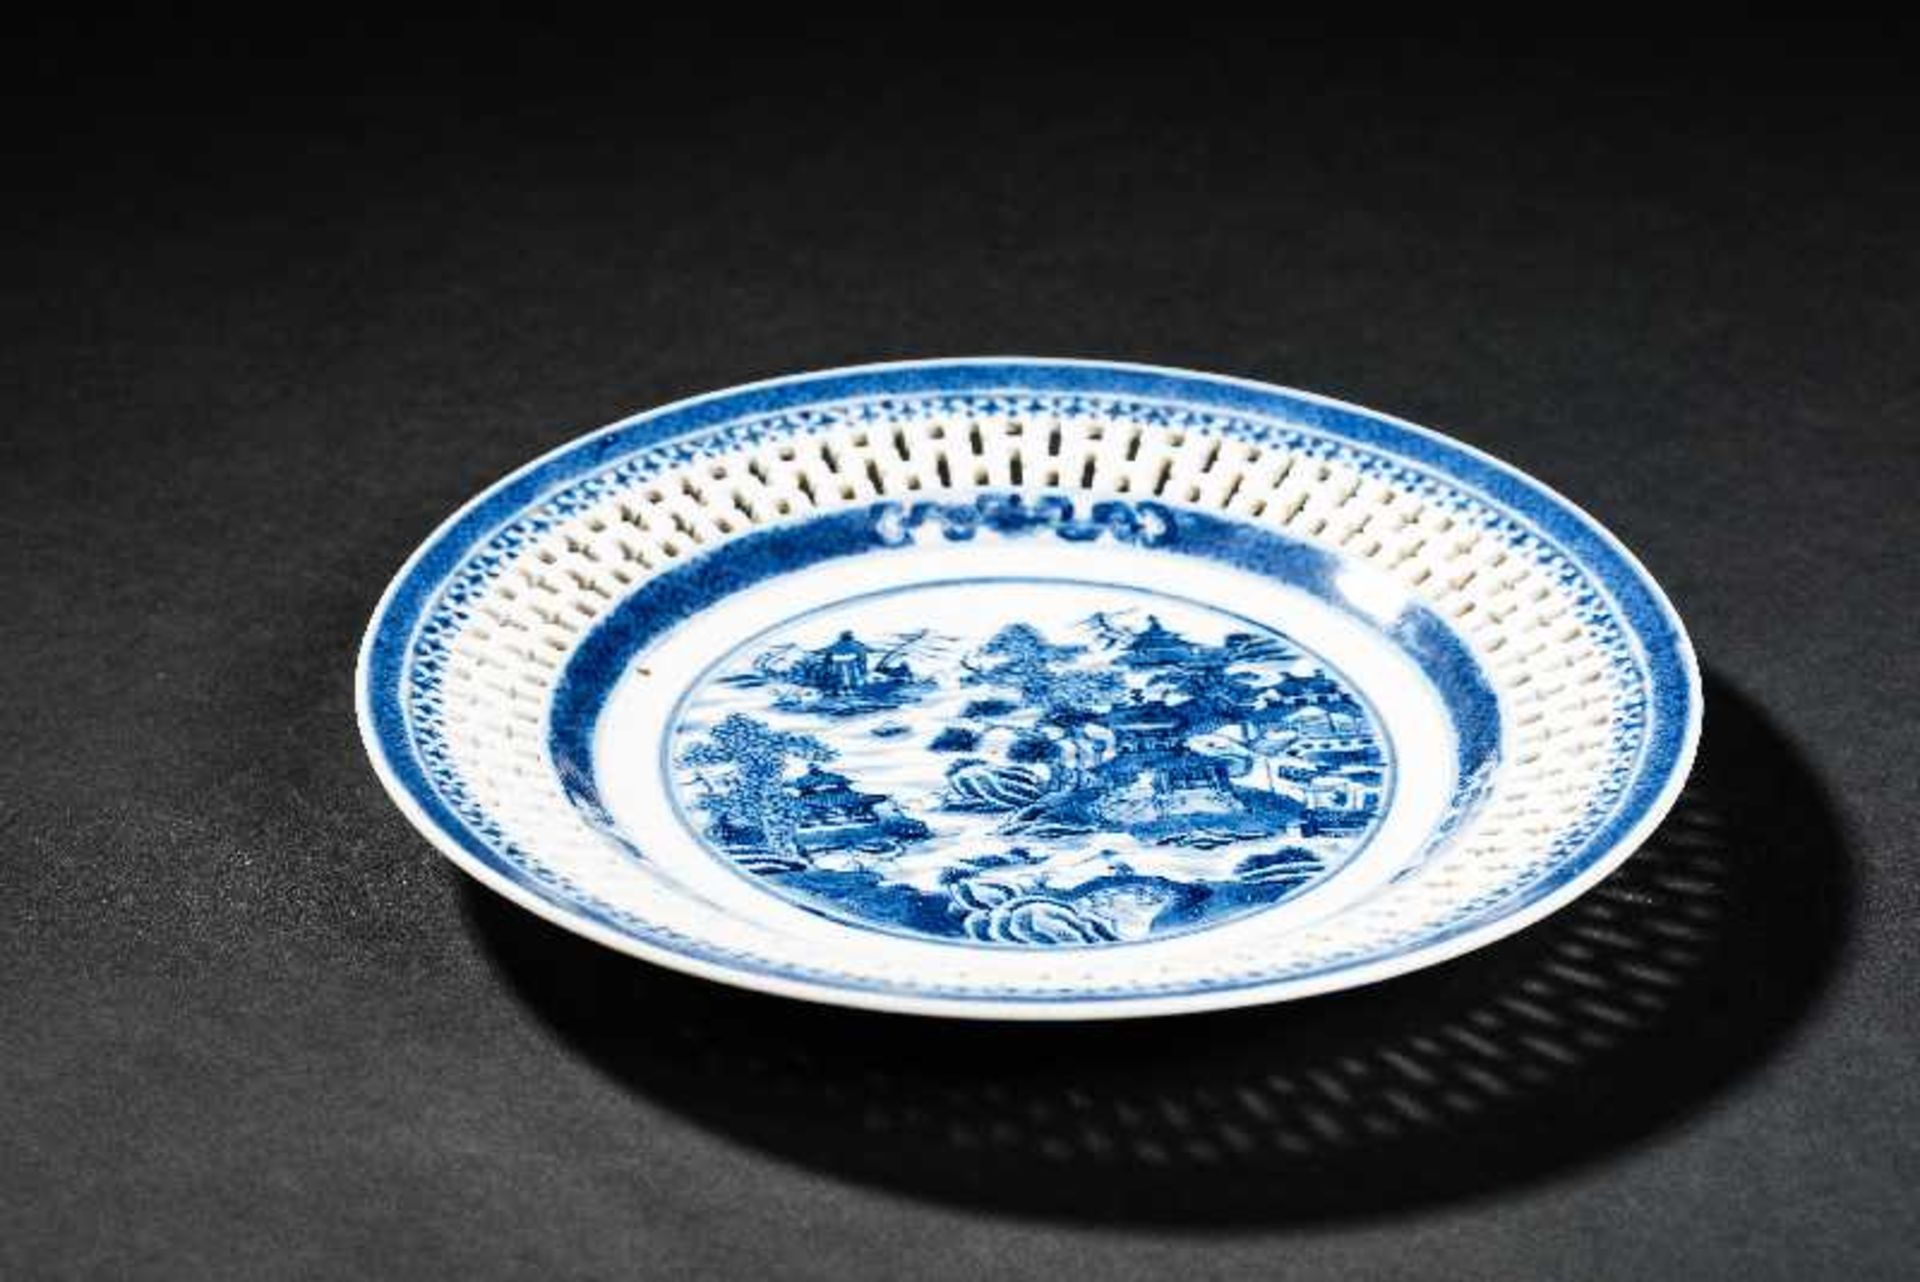 DEKORATIVER TELLER MIT TEMPELLANDSCHAFT Blauweiß-Porzellan. China, Jiaqing-Periode der Qing- - Image 3 of 4